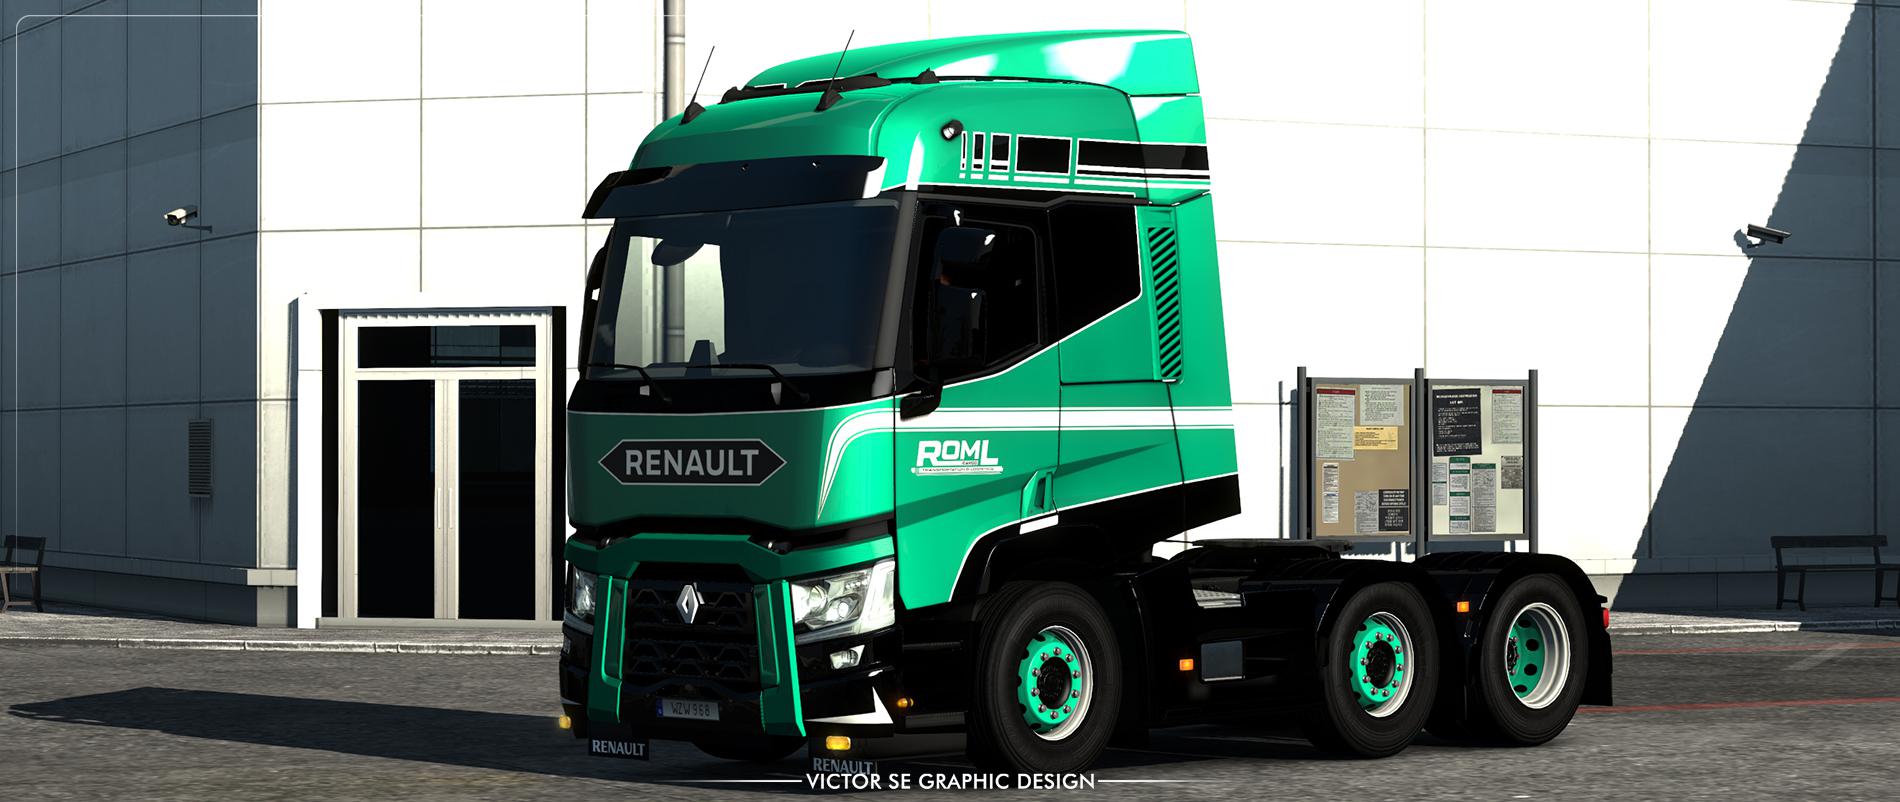 Ets2 Renault T Range Roml Cargo Logistics Special Skin V1 0 1 36 X Euro Truck Simulator 2 Mods Club